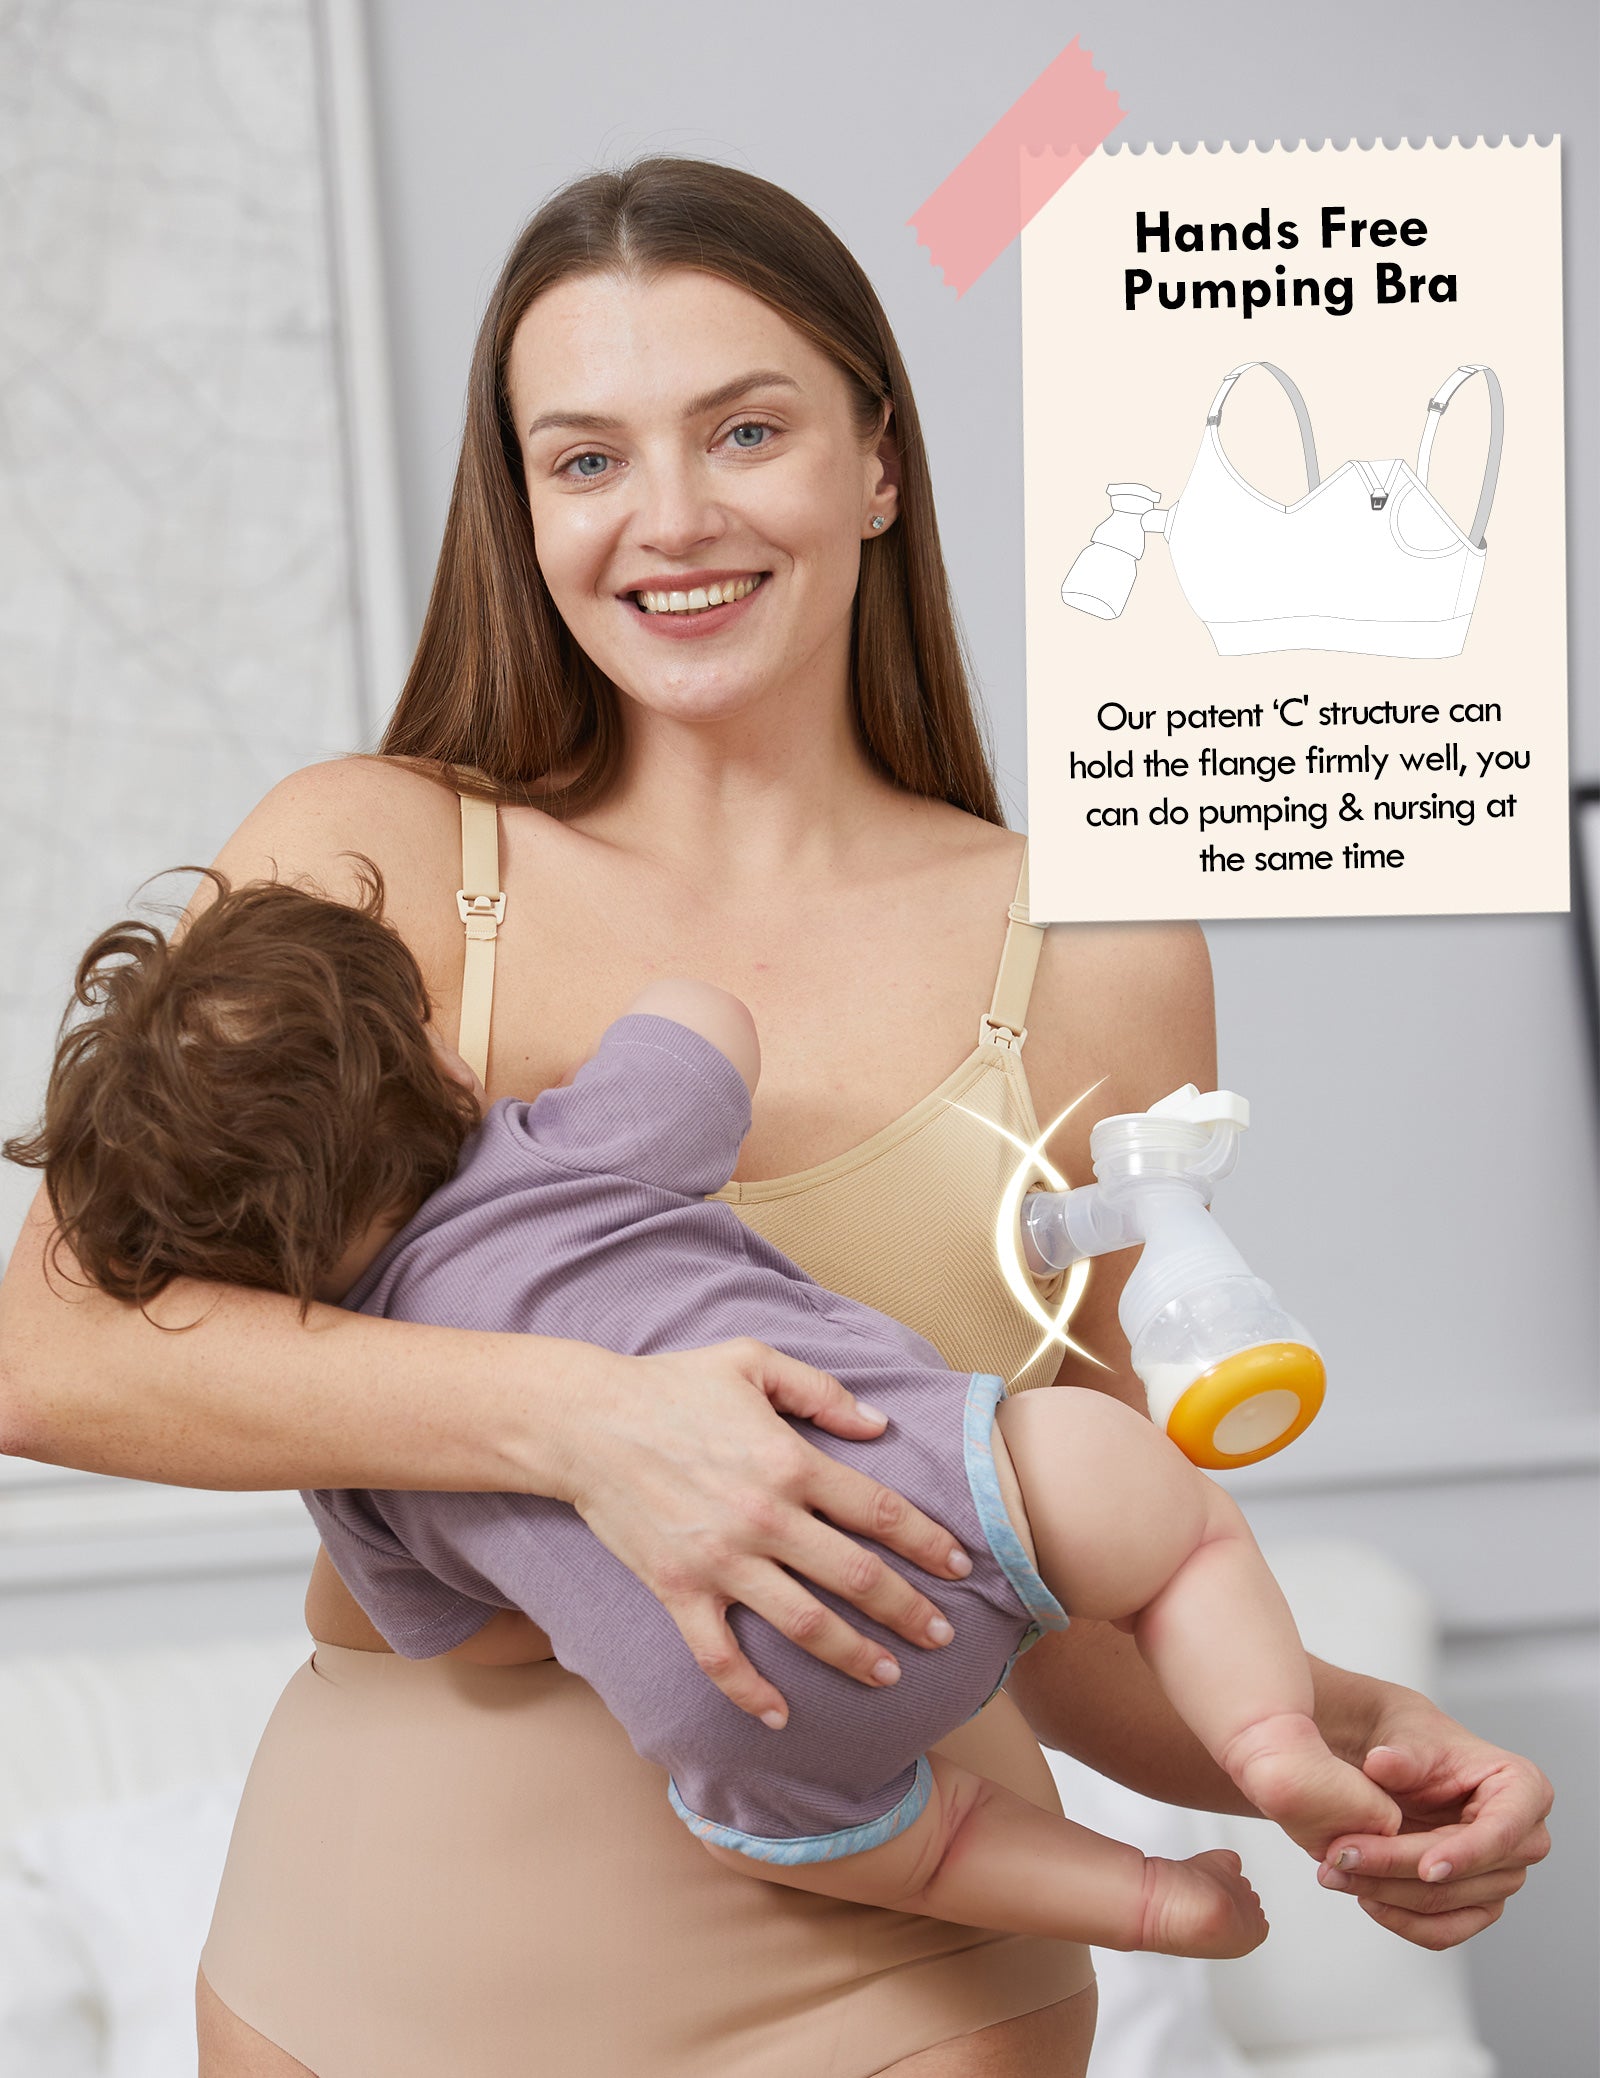 HOFISH Women's Seamless All-in-One Hands Free Pumping Bra Supportive Maternity Nursing & Everyday Bra